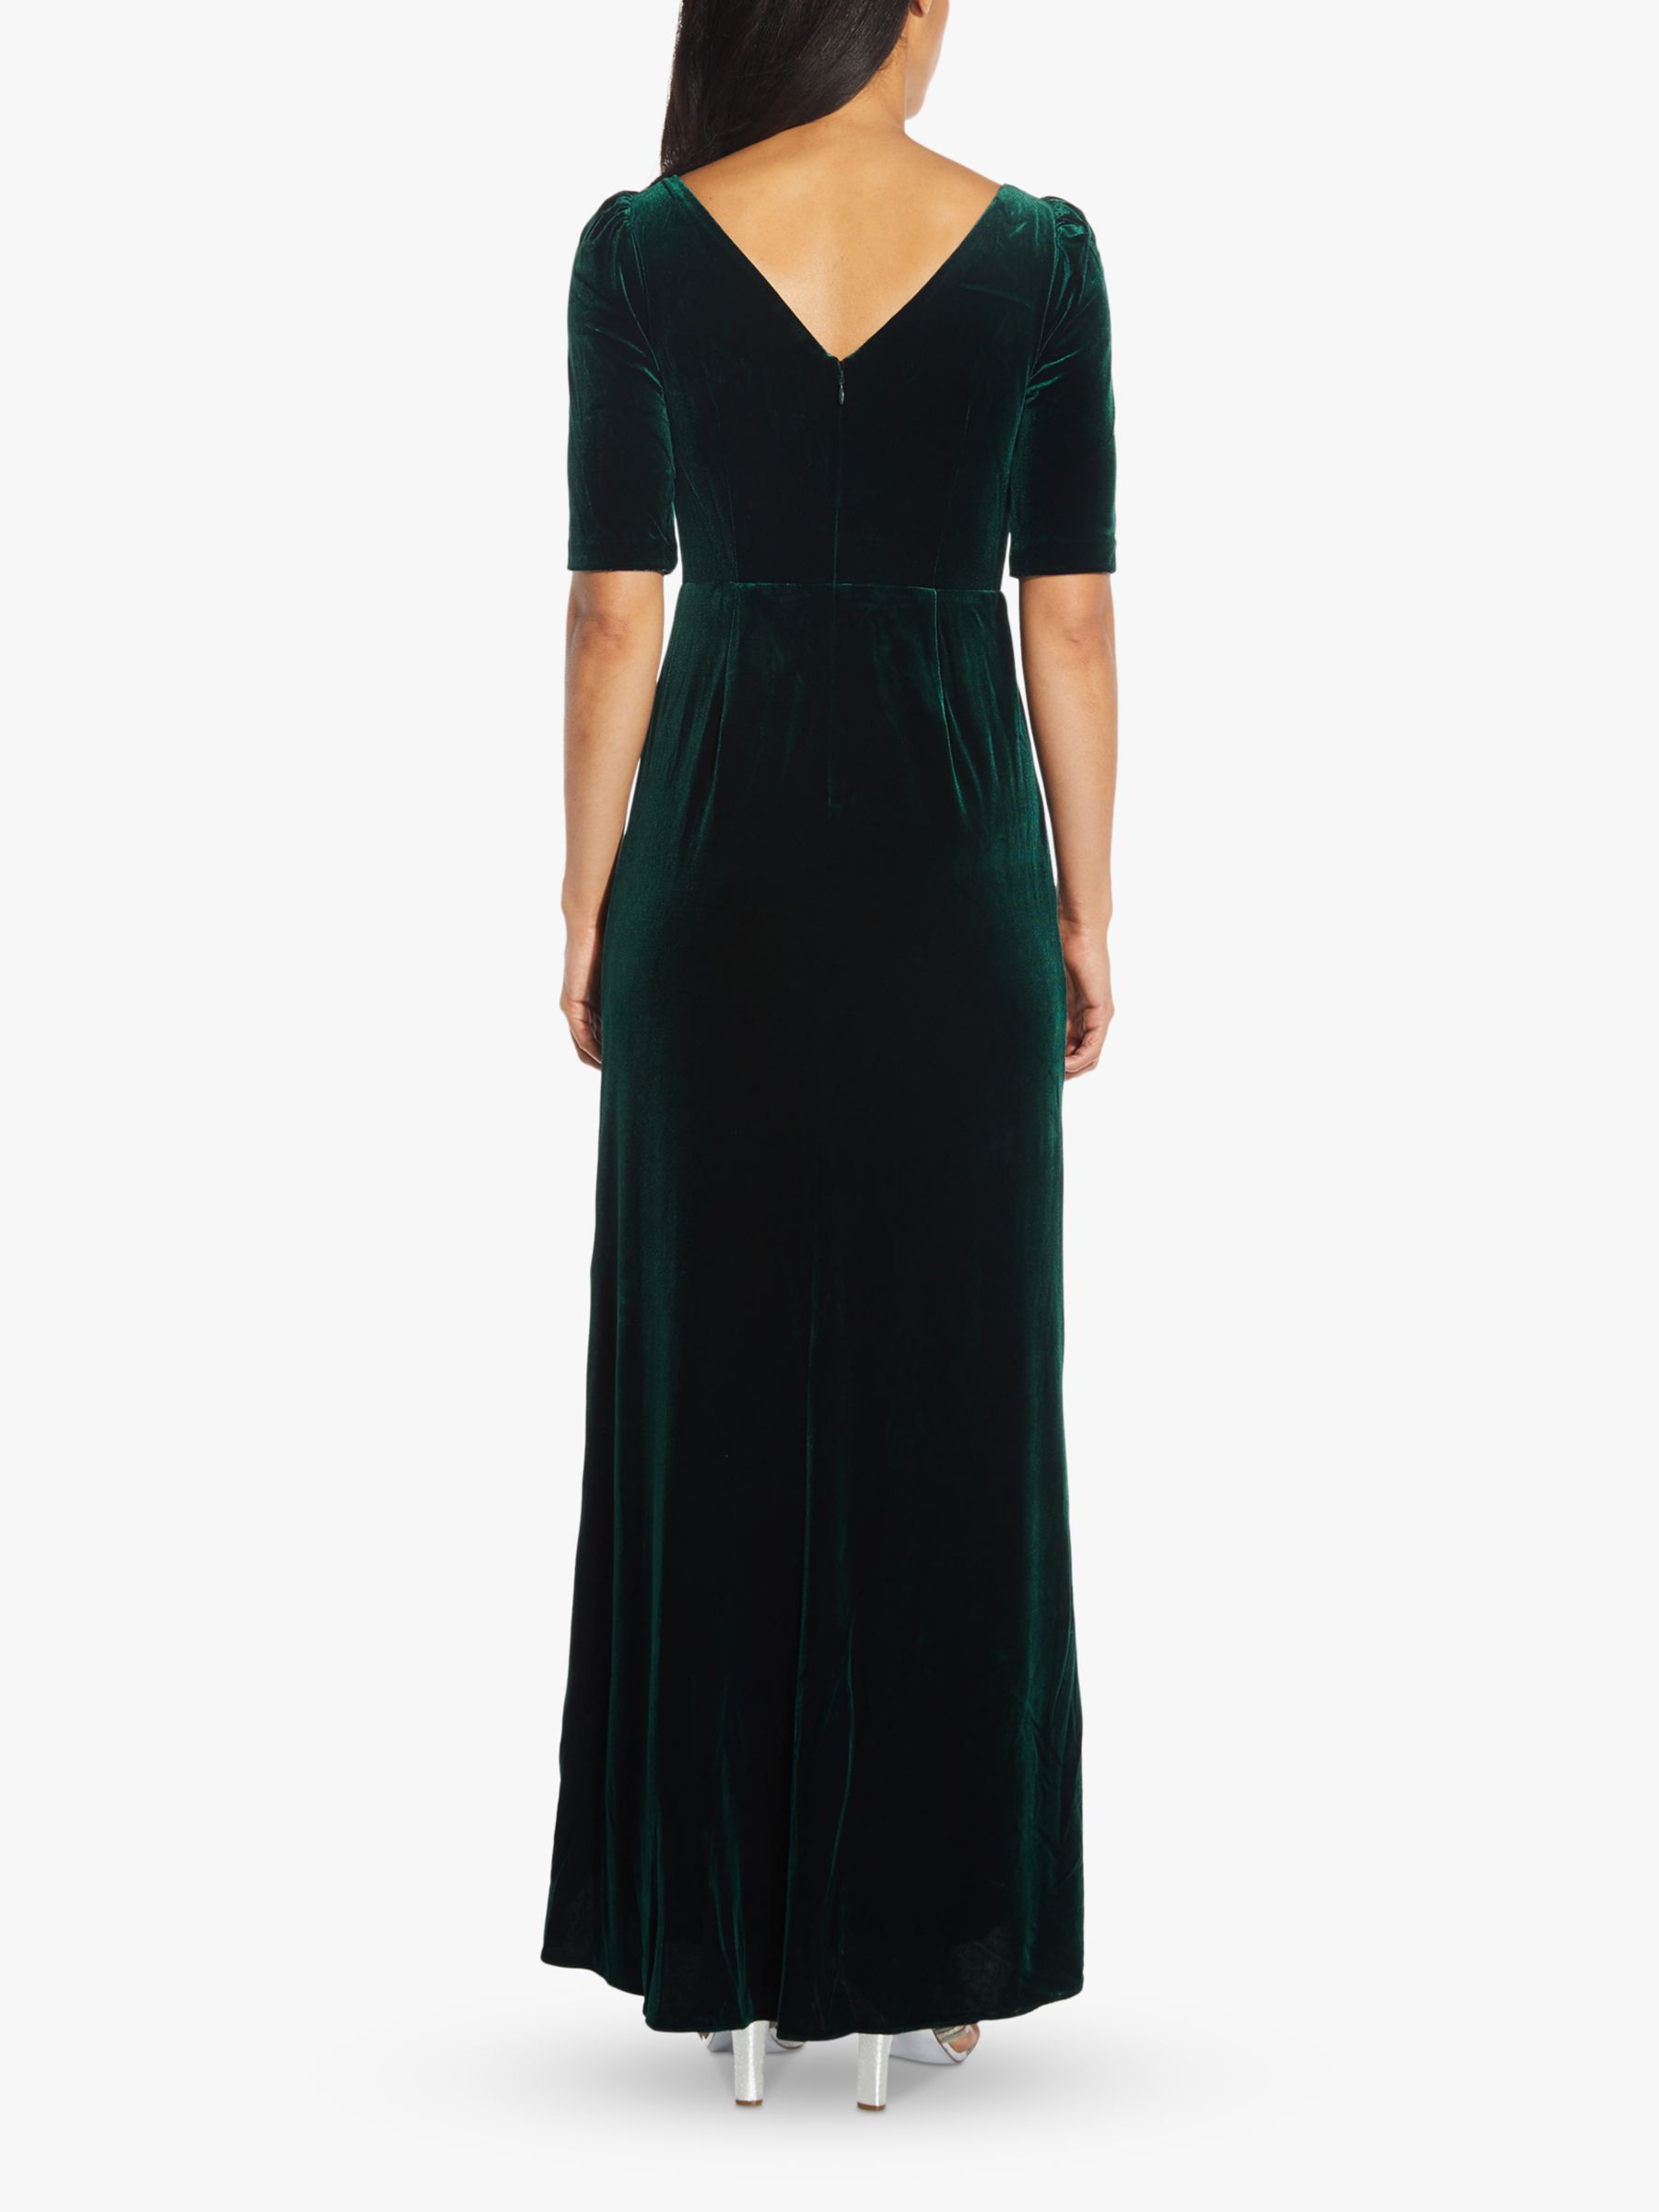 Adrianna Papell Gathered Velvet Dress, Emerald